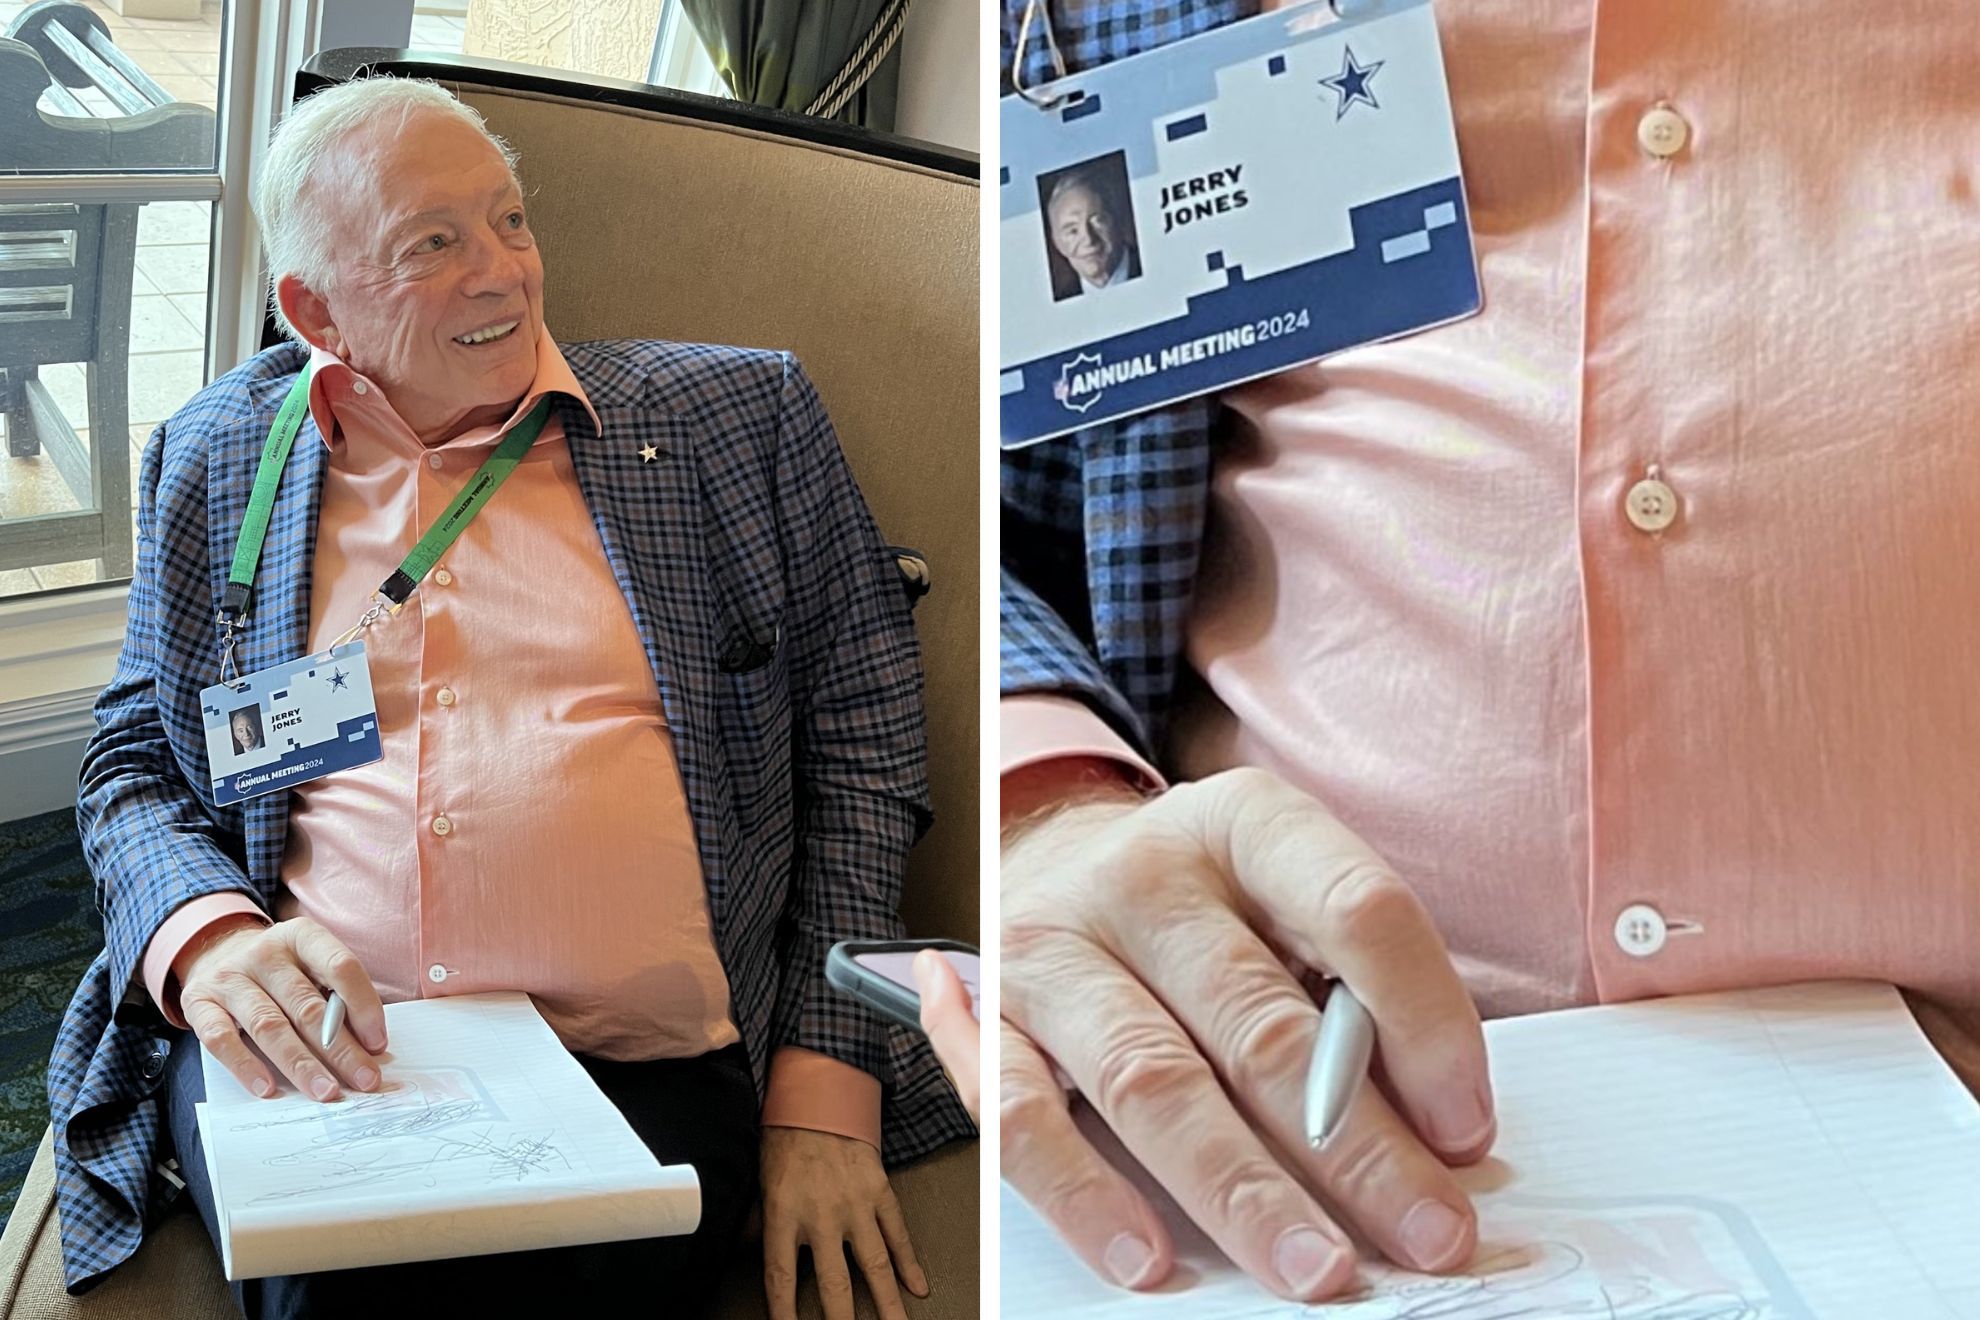 Cowboys fans mock owner Jerry Jones for his doodles during media interview